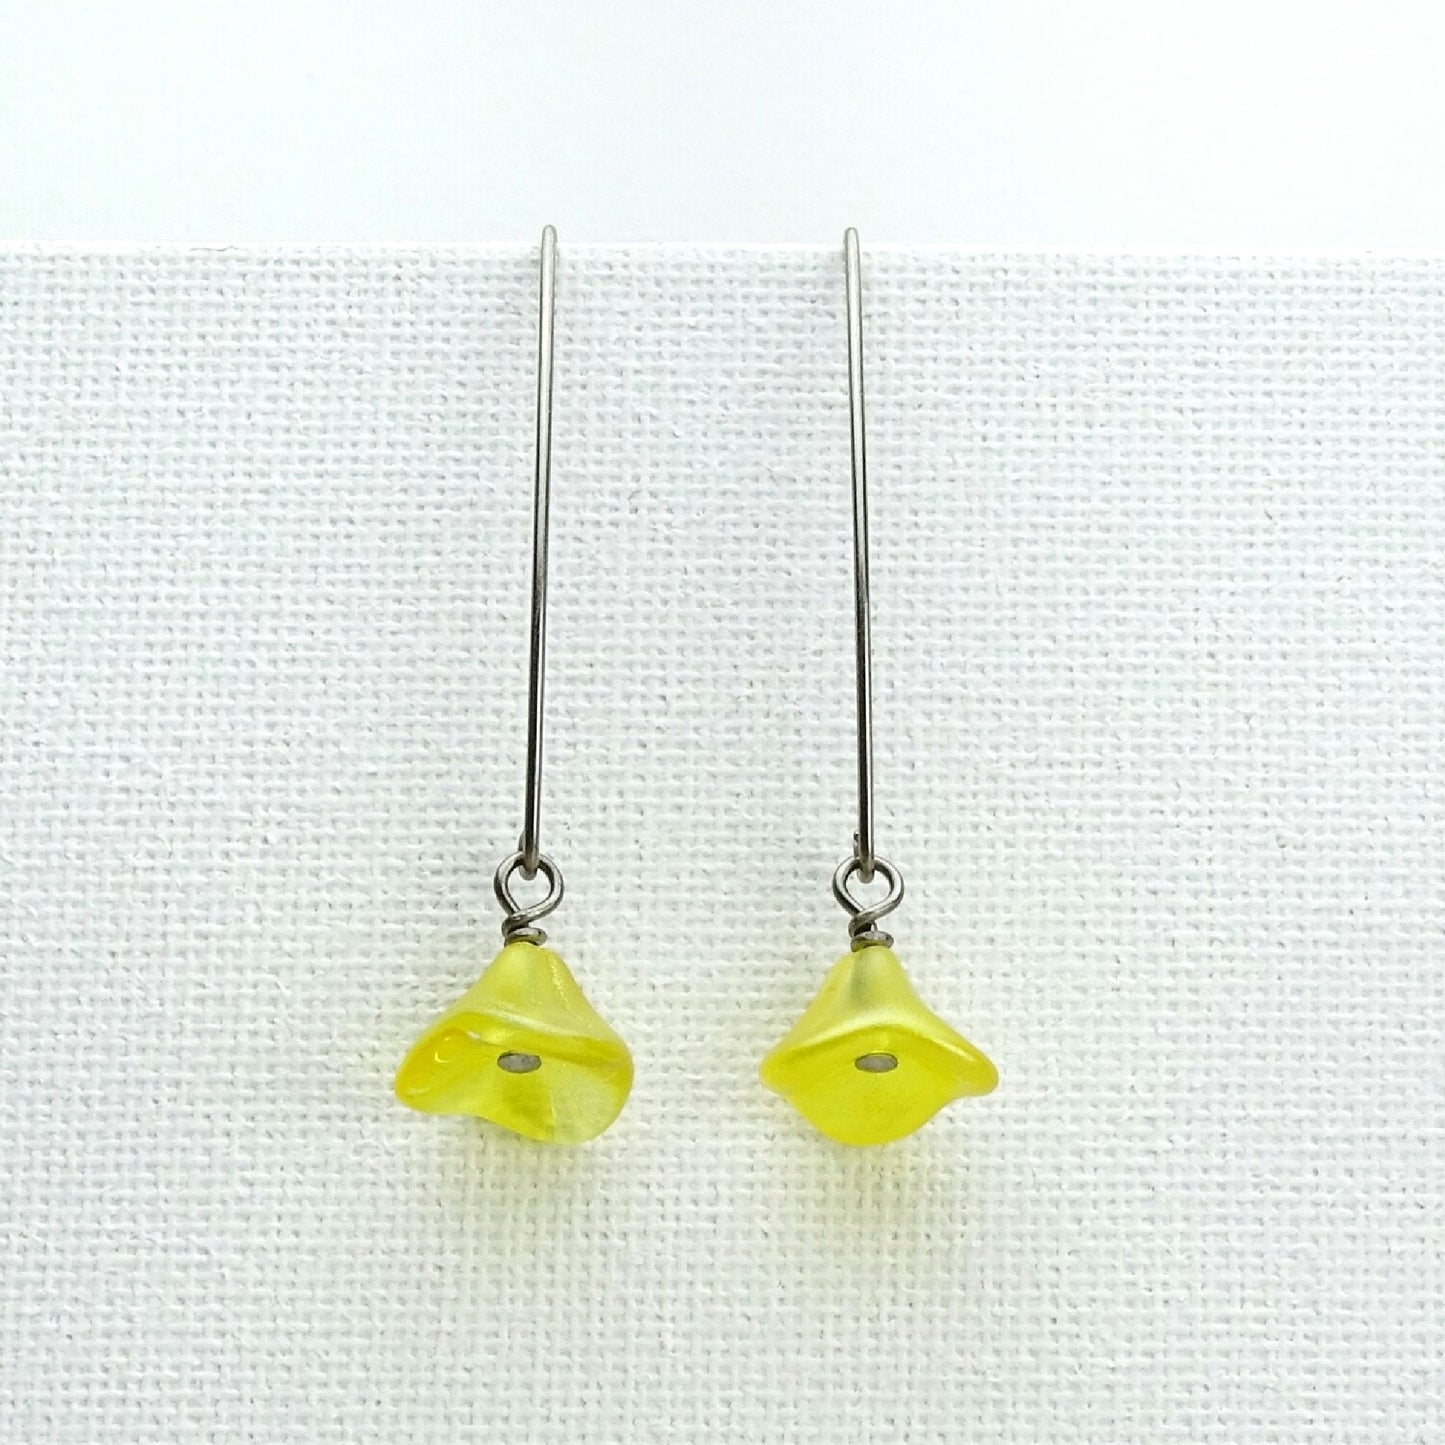 Buttercup Yellow Czech Glass Flowers Niobium Earrings, Arch Shaped Earwires, Hypoallergenic Nickel Free Titanium Earrings for Sensitive Ears